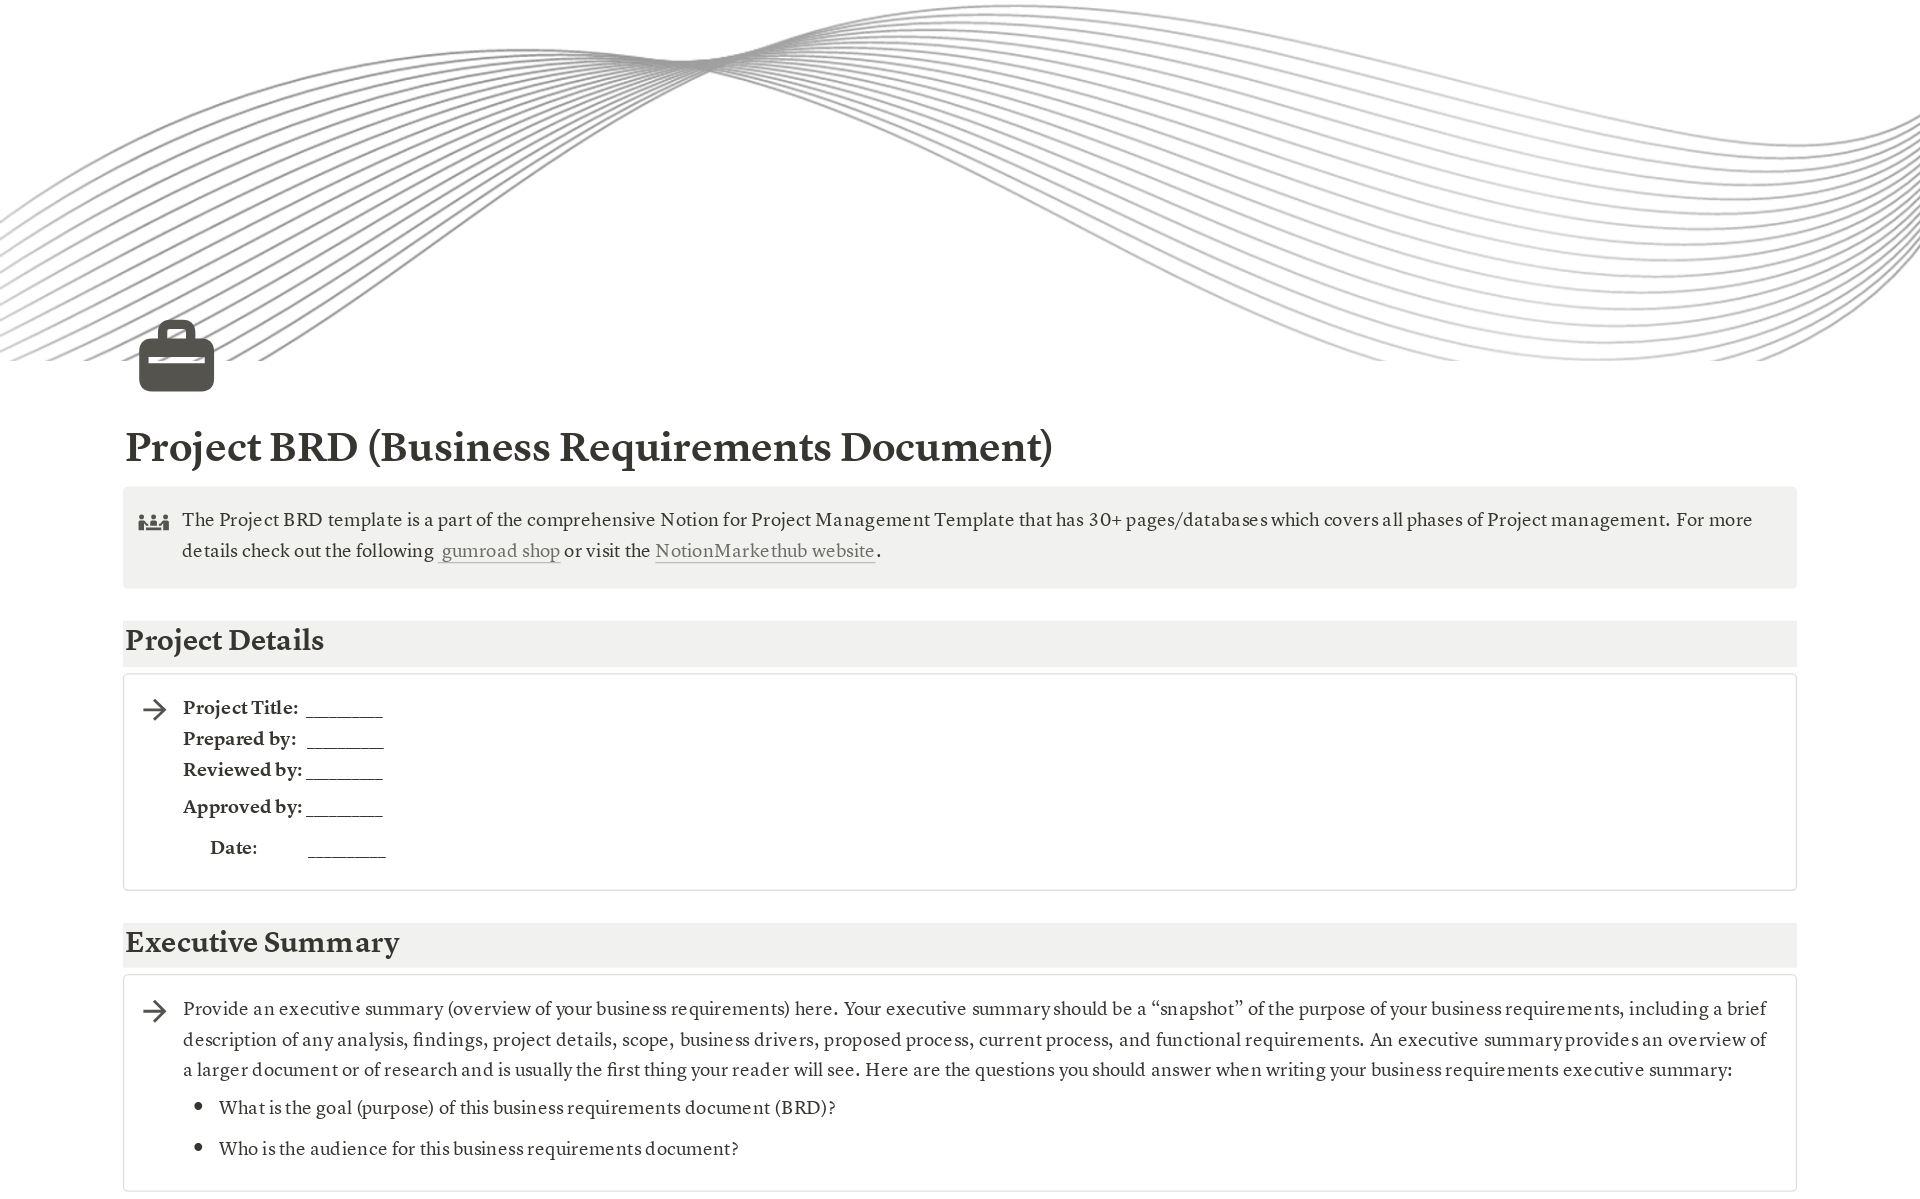 Vista previa de plantilla para Business Requirements Document BRD for Projects